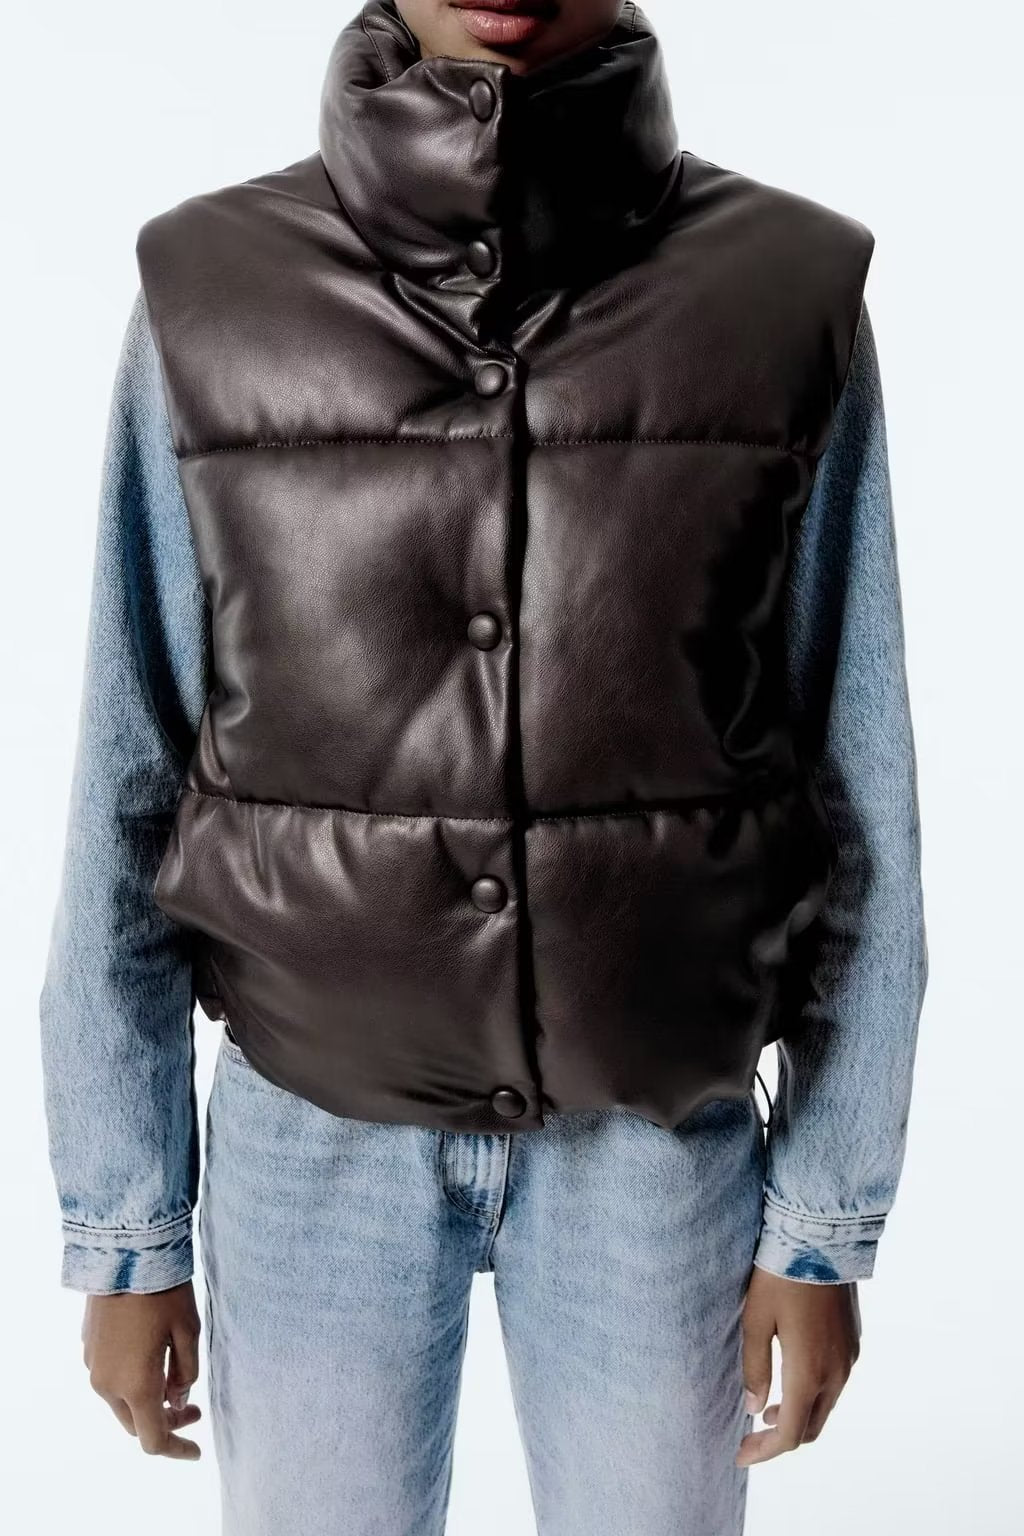 Winter Casual Stand Collar Zipper Faux Leather Warm Vest Women